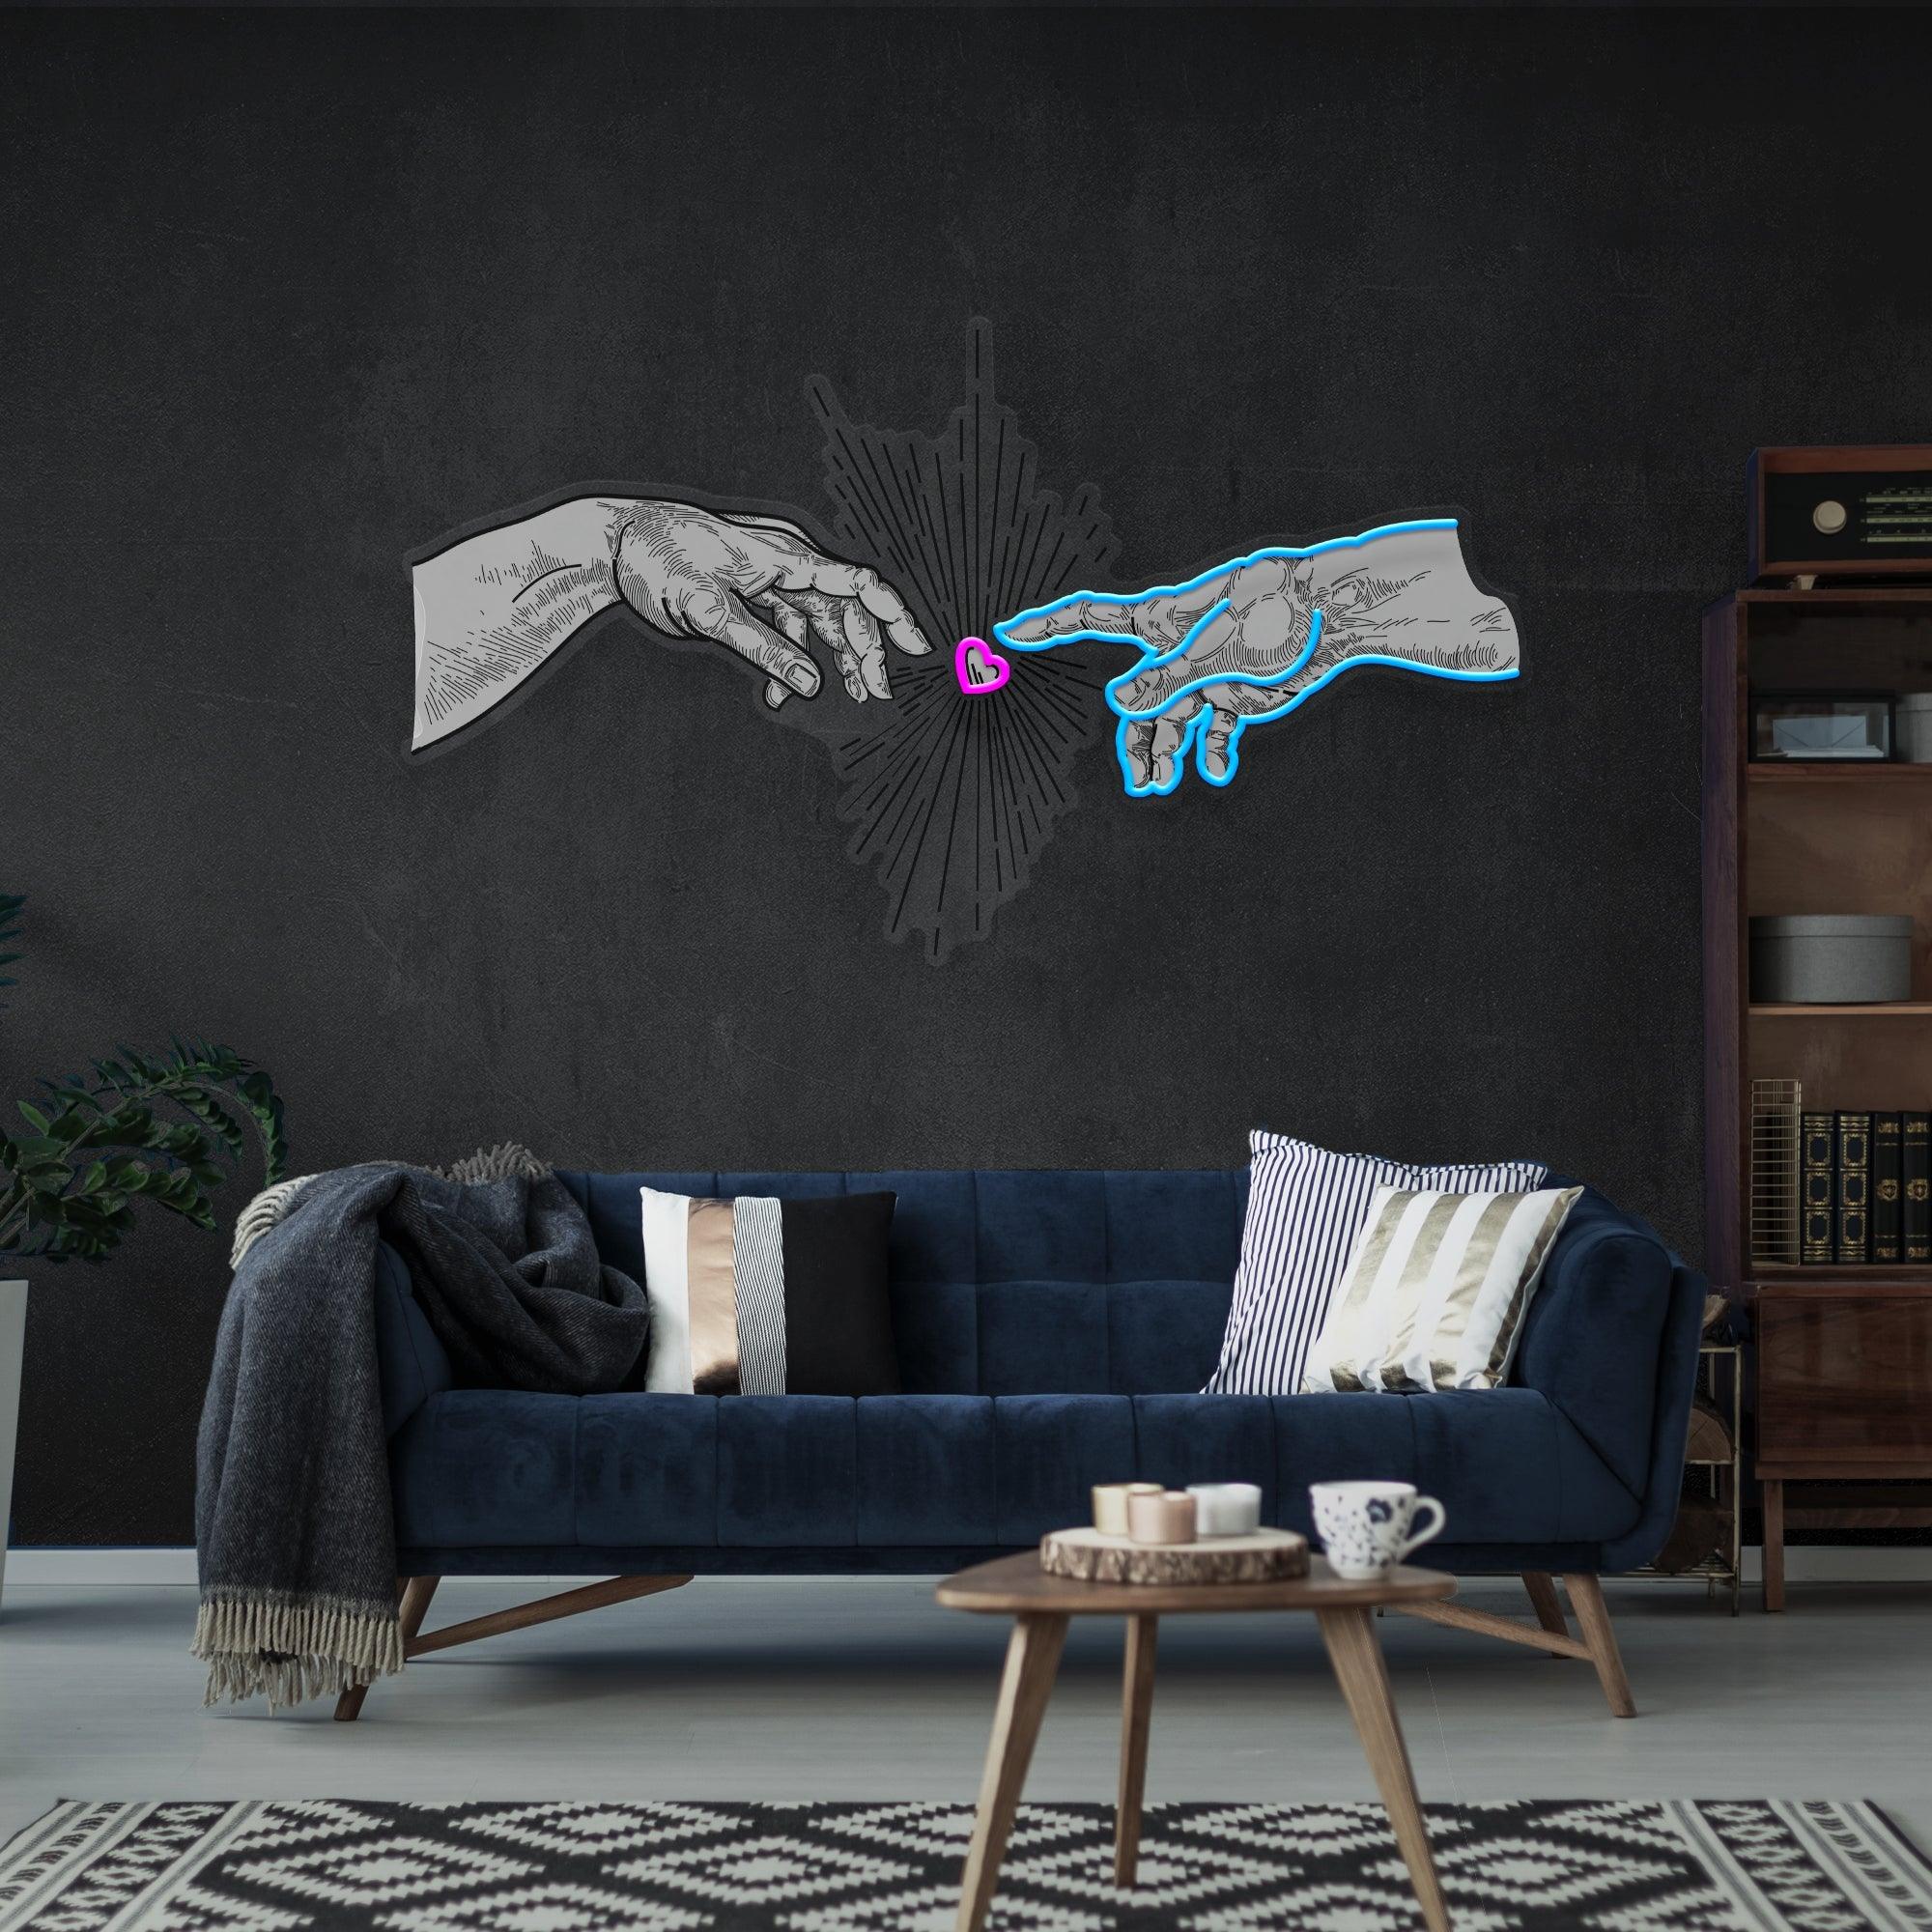 Touching Hand Artwork Led Neon Sign Light - Neonbir